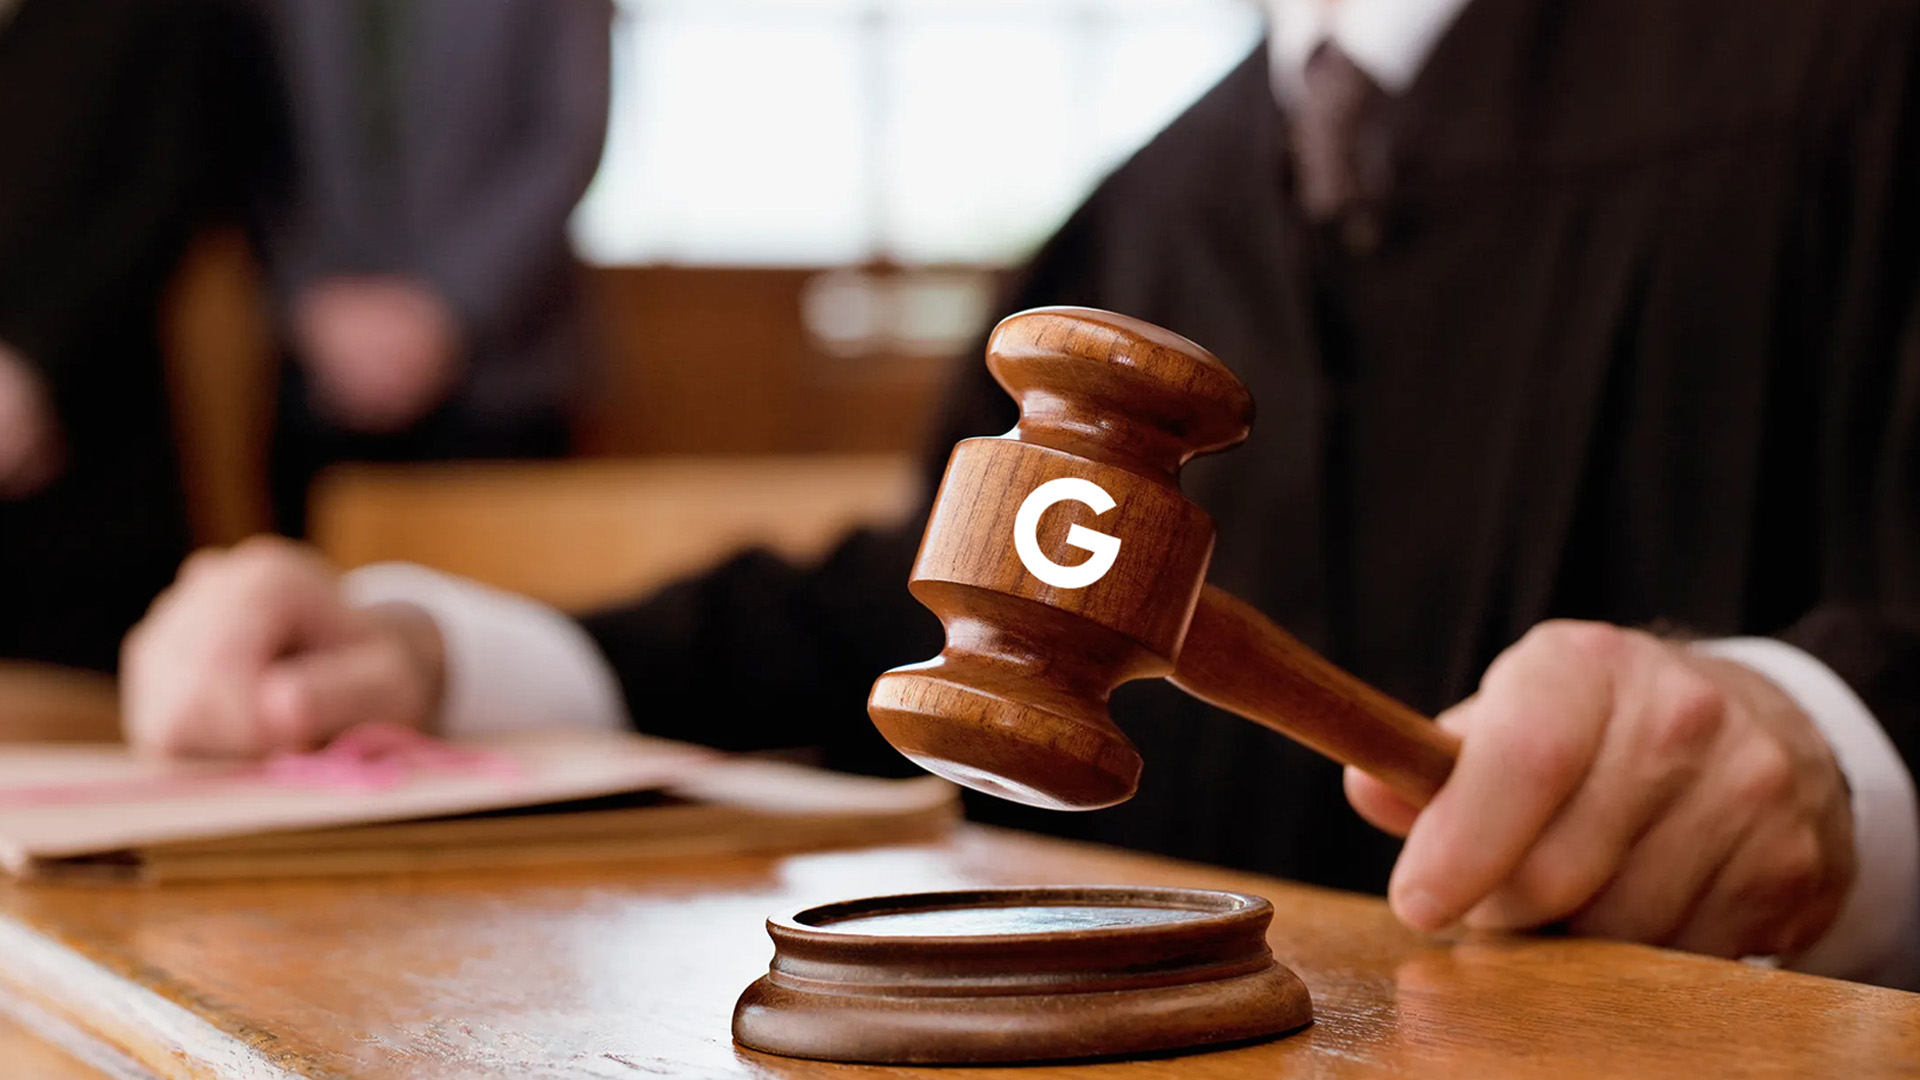 Google will be judged in Mexico and establish international jurisprudence